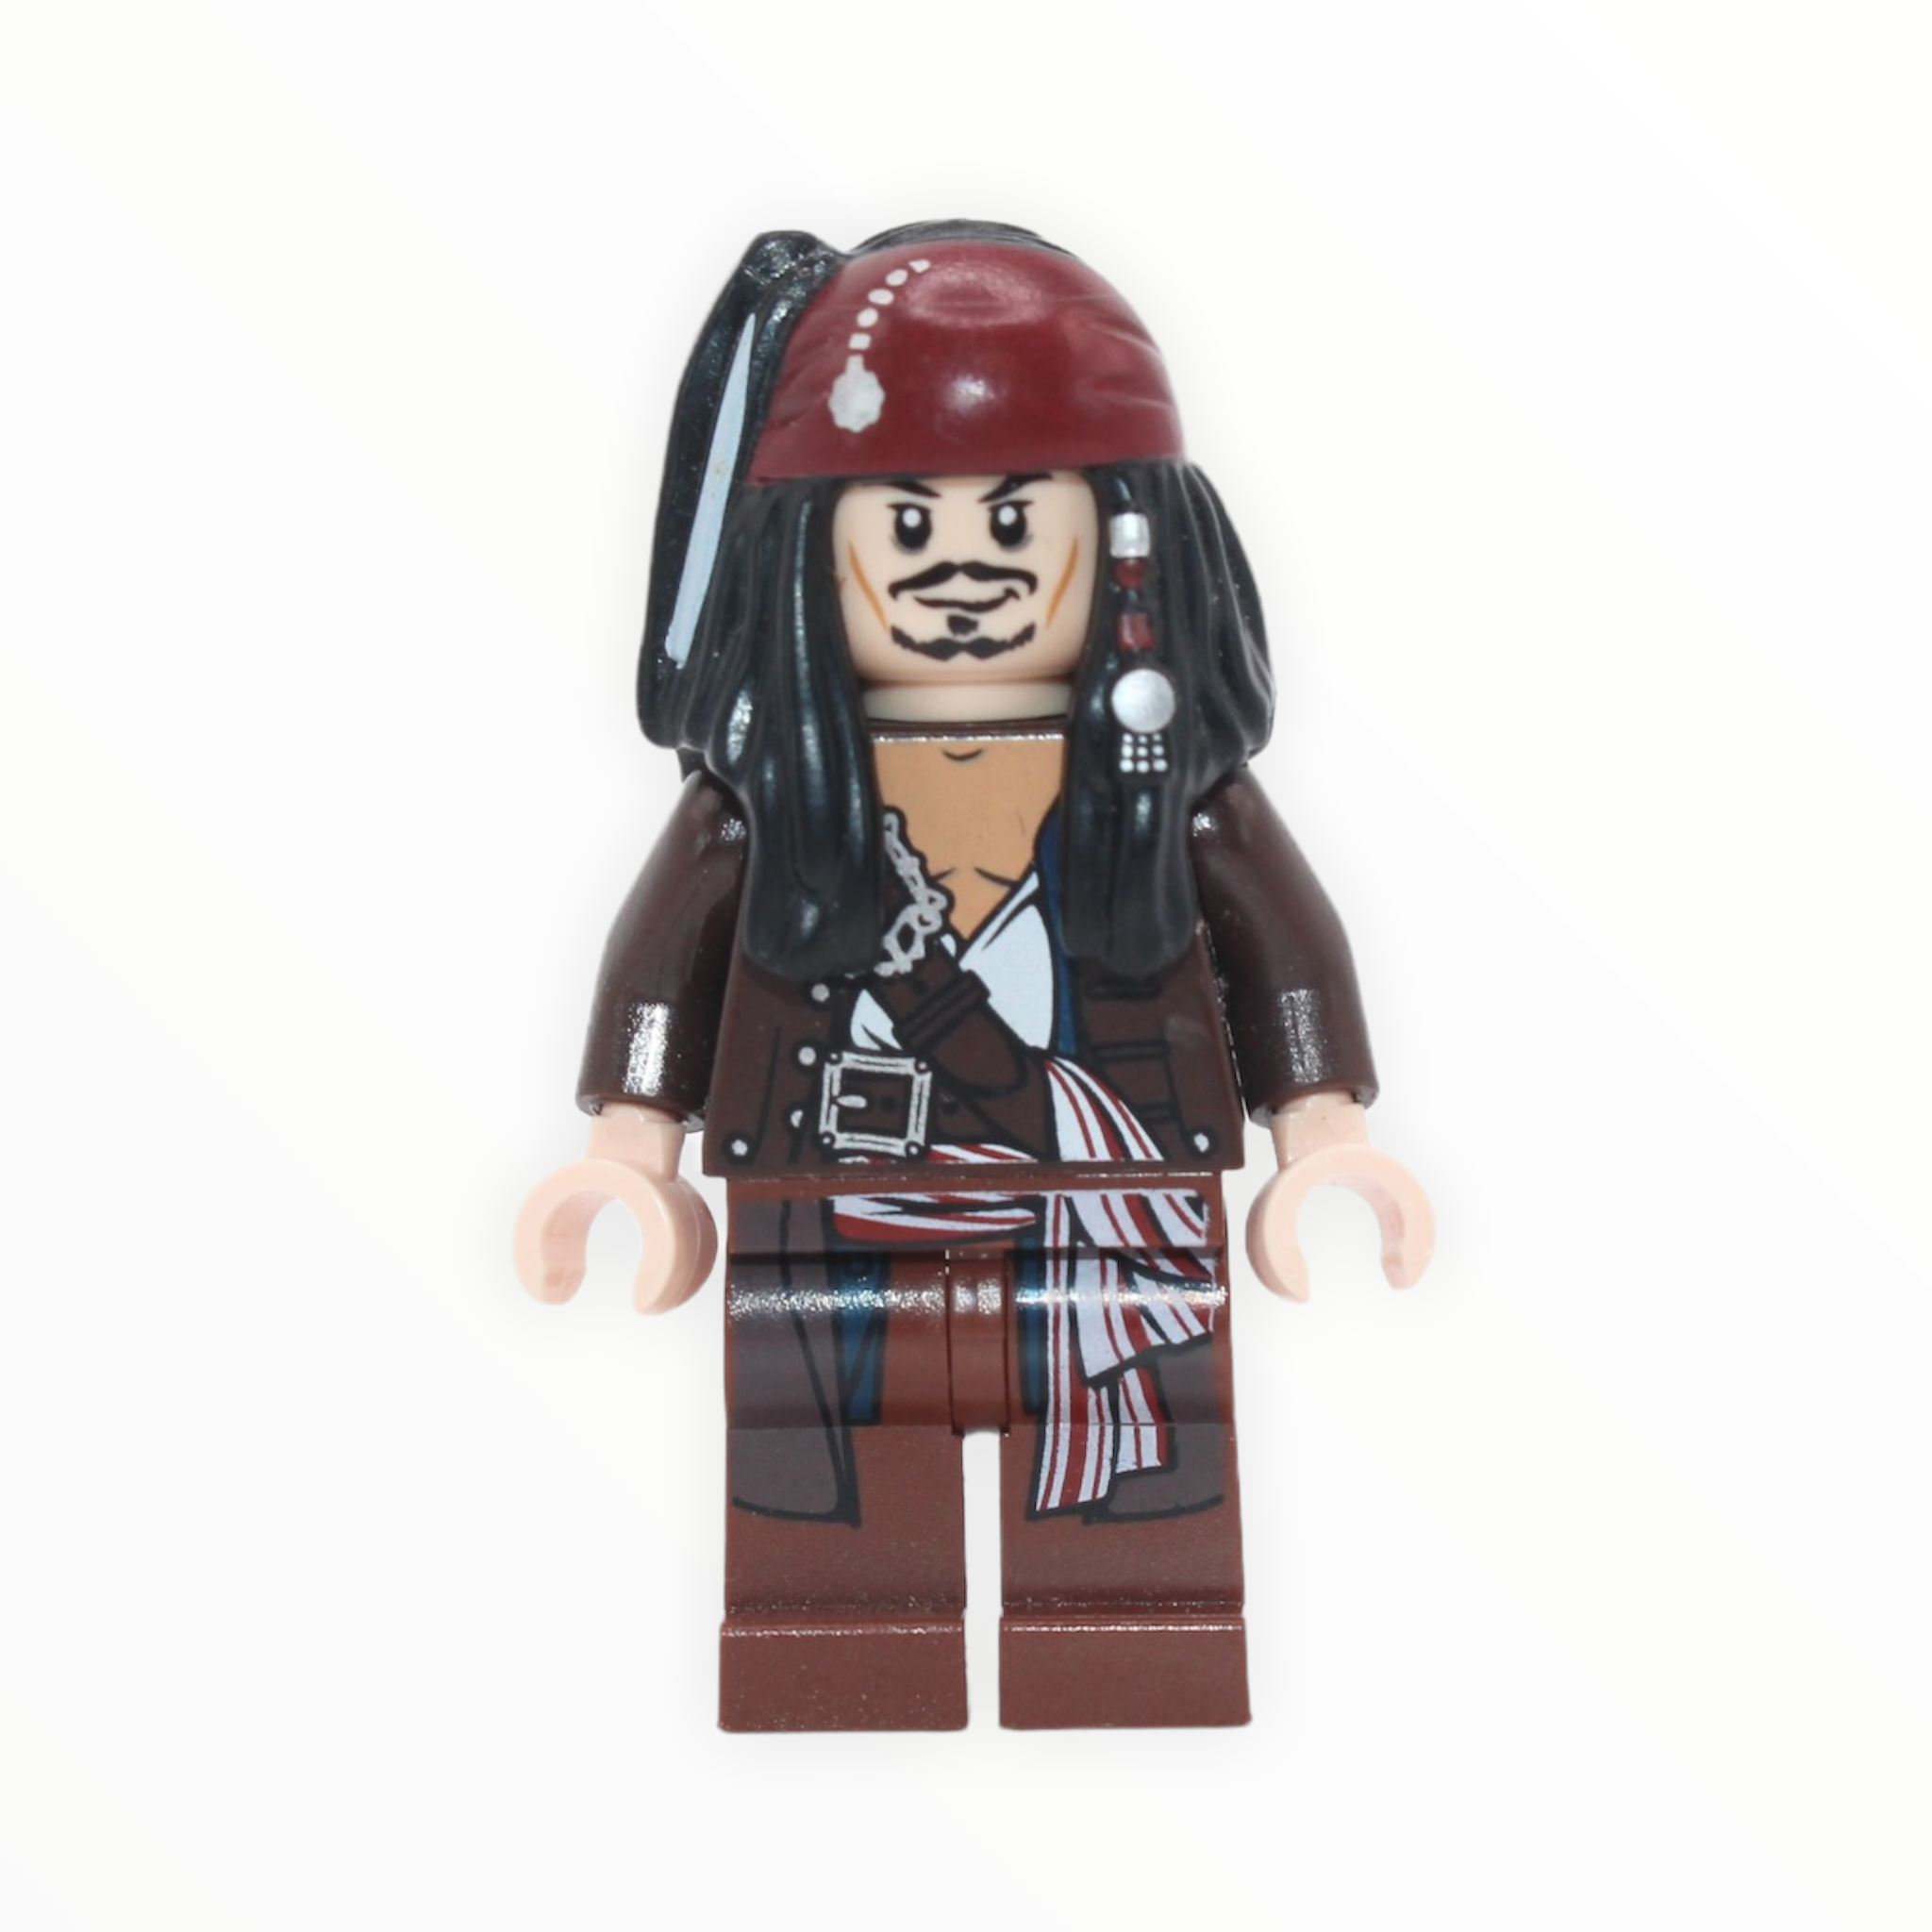 Captain Jack Sparrow (coat, smile / scared)